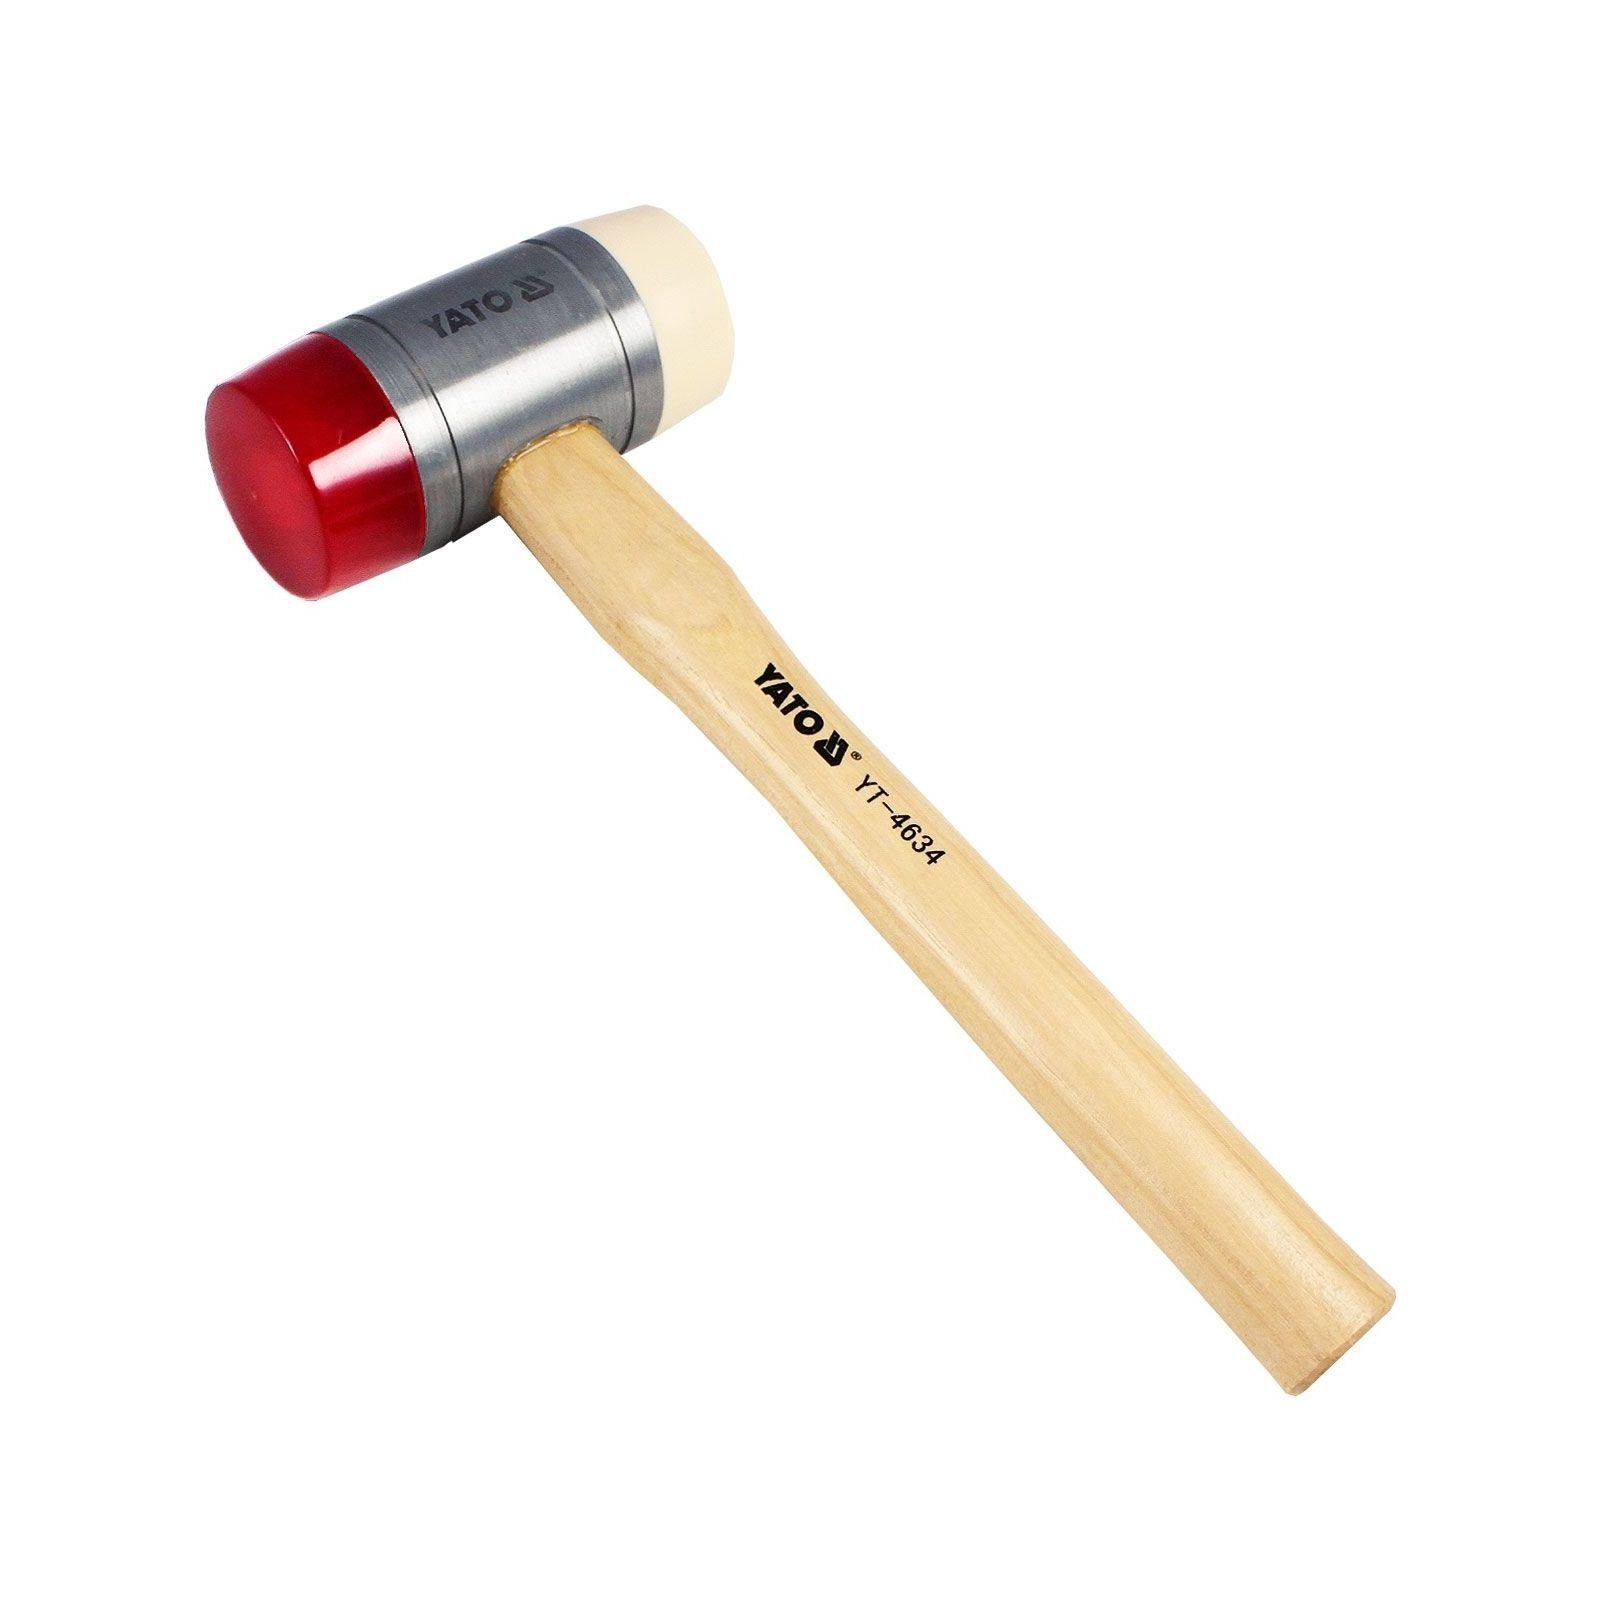 【ausverkauft】 Yato Holzhammer Schonhammer Gummihammer Hammer Nylon PU - Schlagkopf 150g g weiß rot 1340